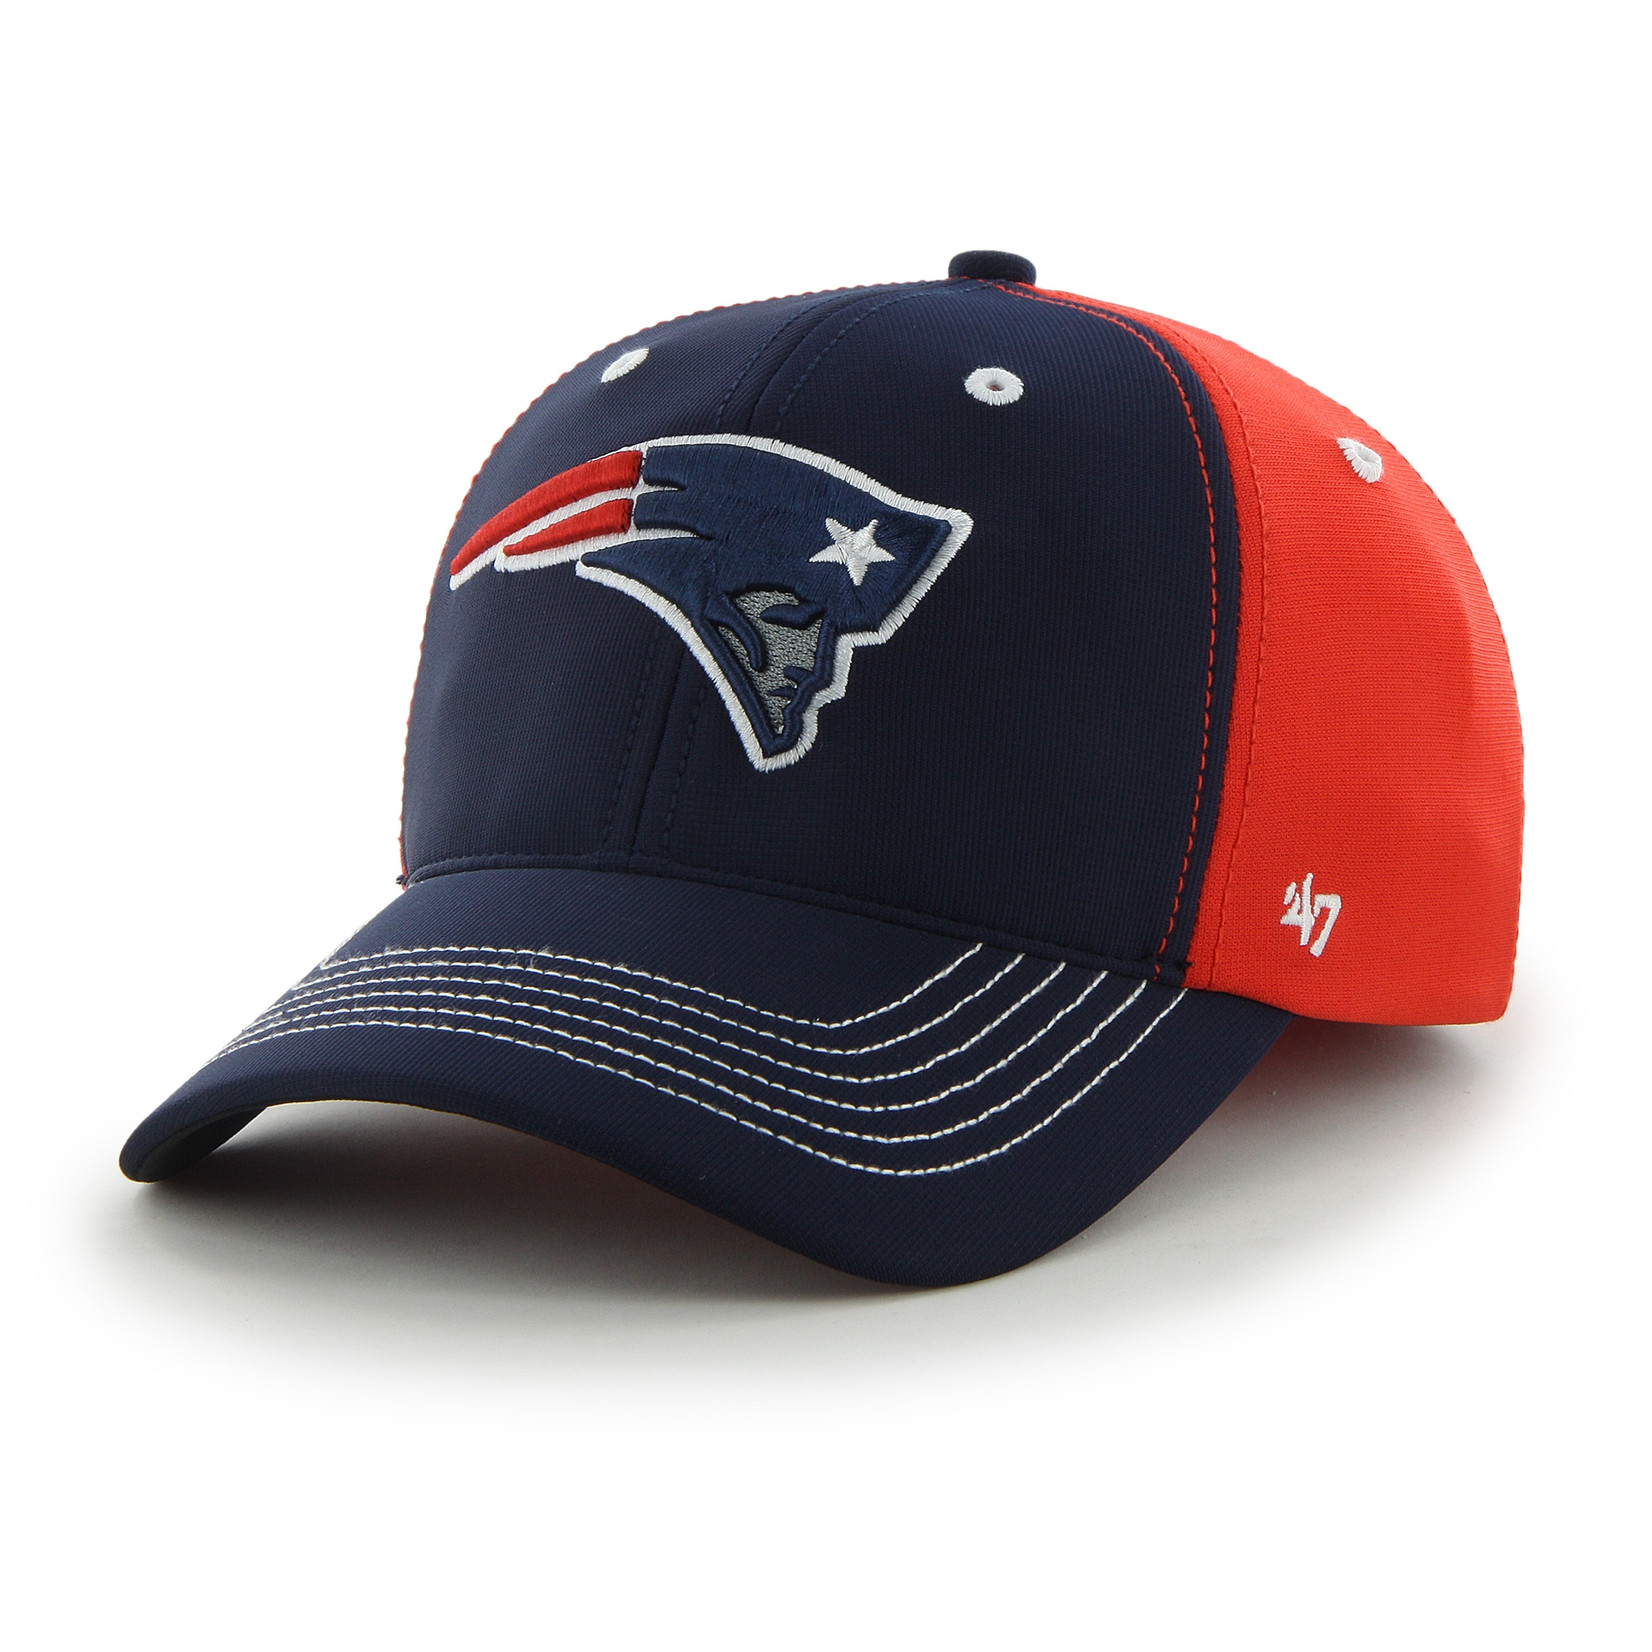 '47 Brand Patriots Hat 2-Tone Navy/Red - Flex Fit